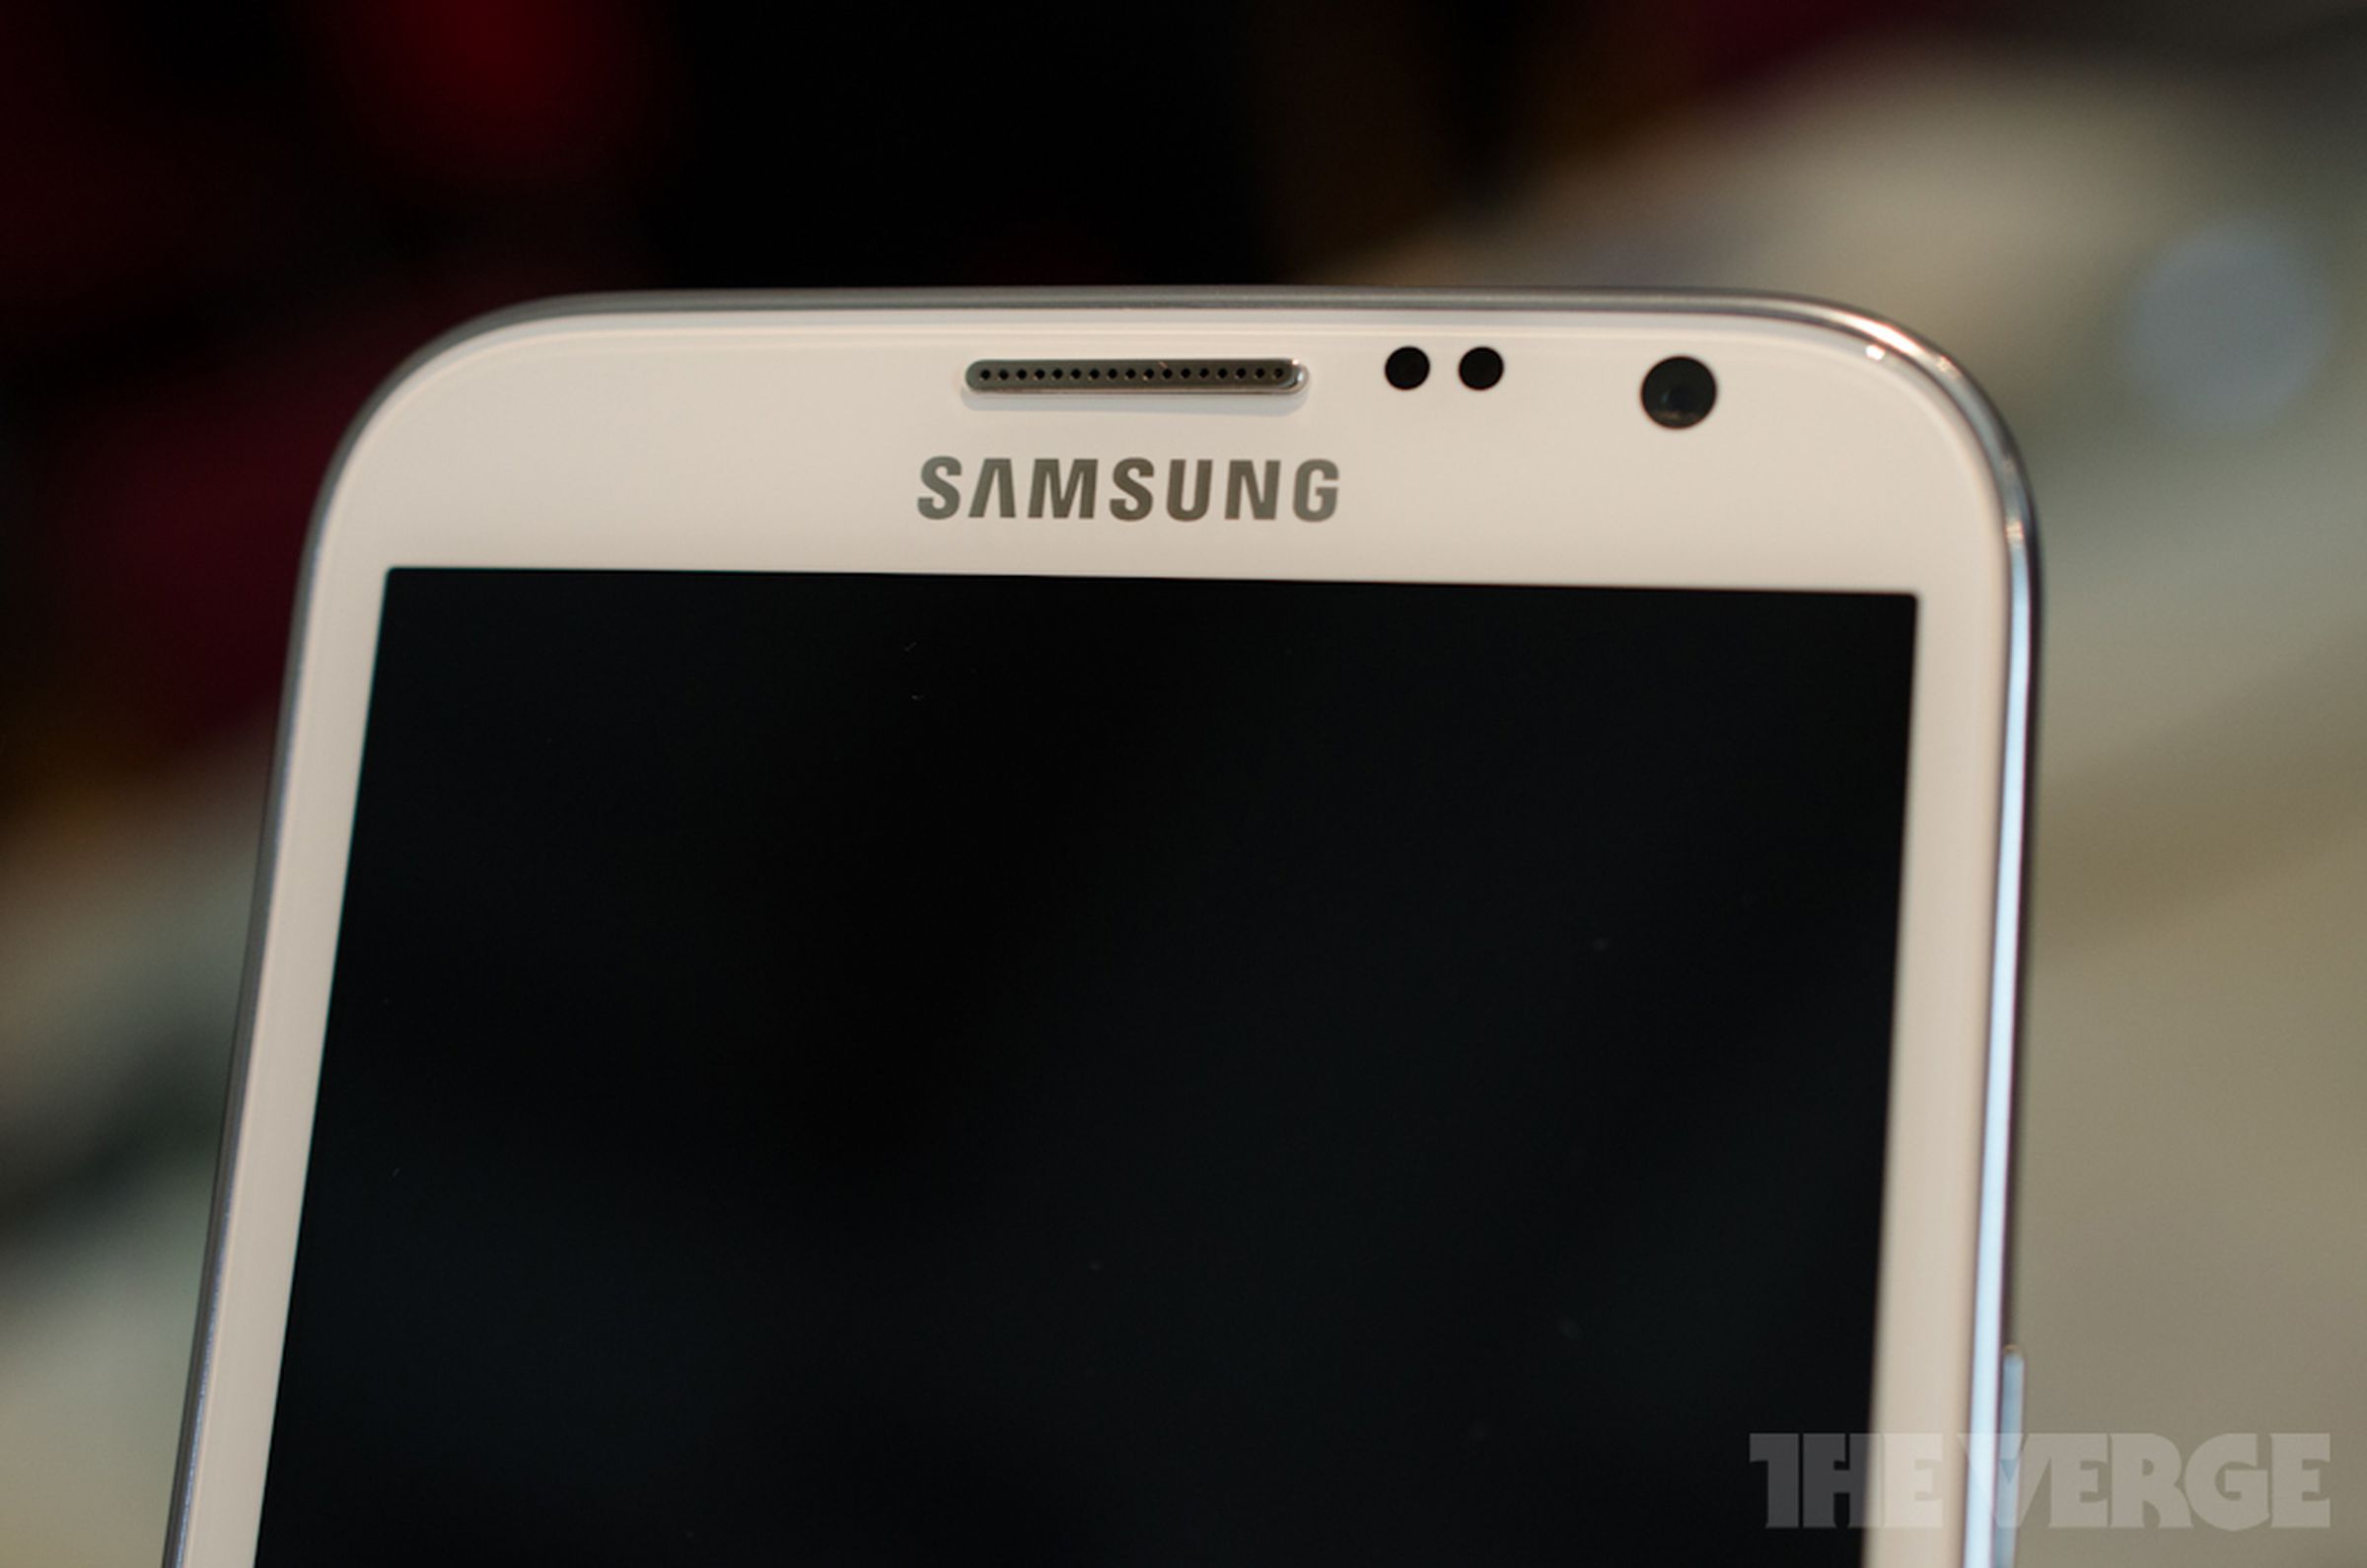 Samsung Galaxy Note II hands-on photos